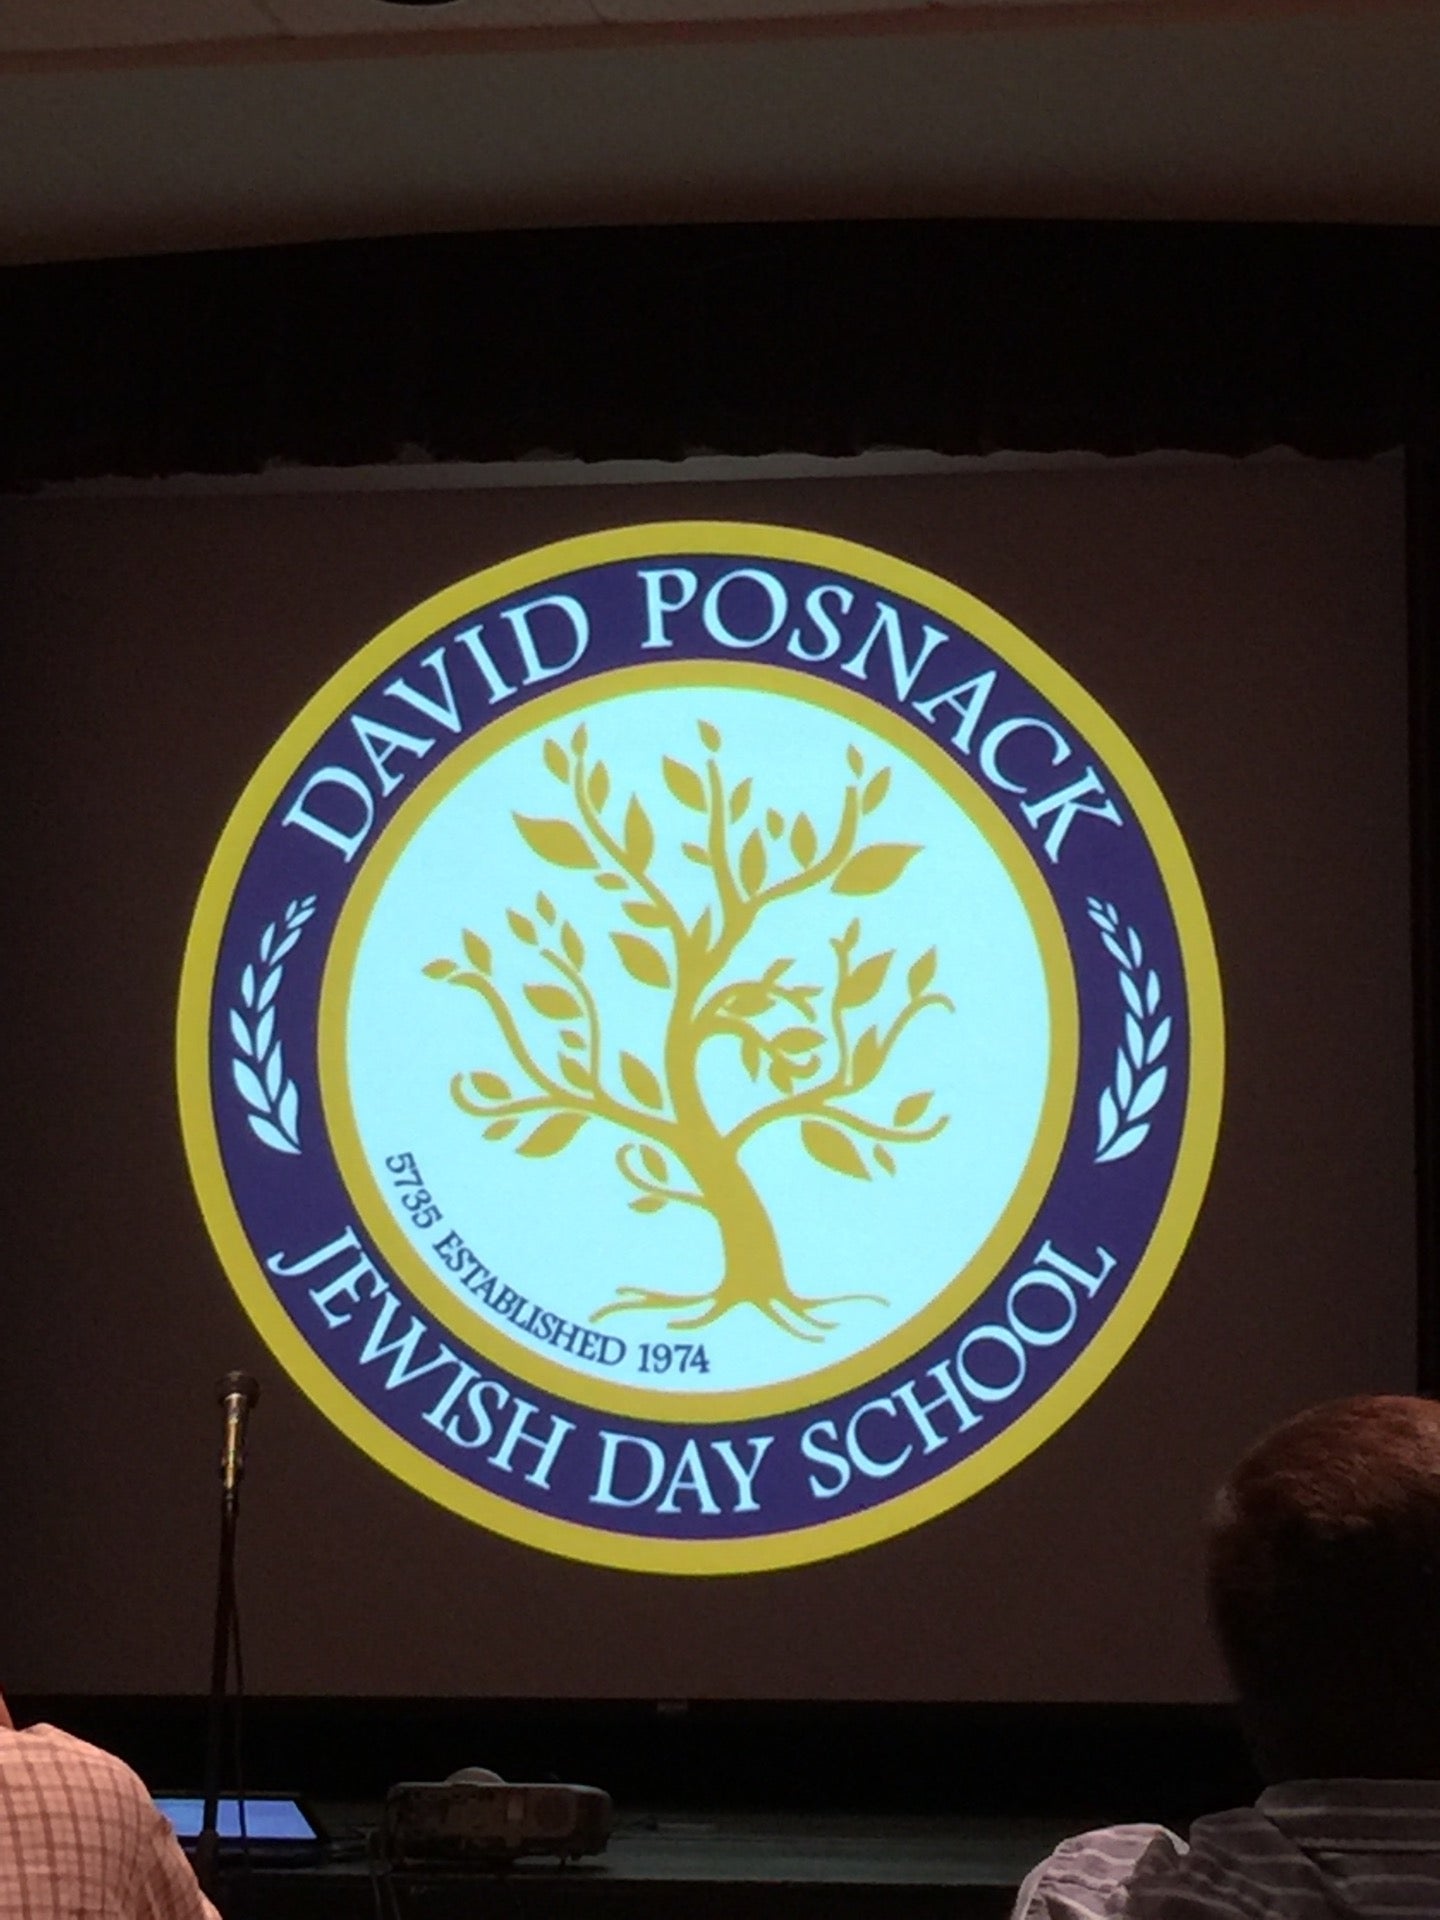 David Posnack Hebrew Day School, 5810 S Pine Island Rd, Davie, FL